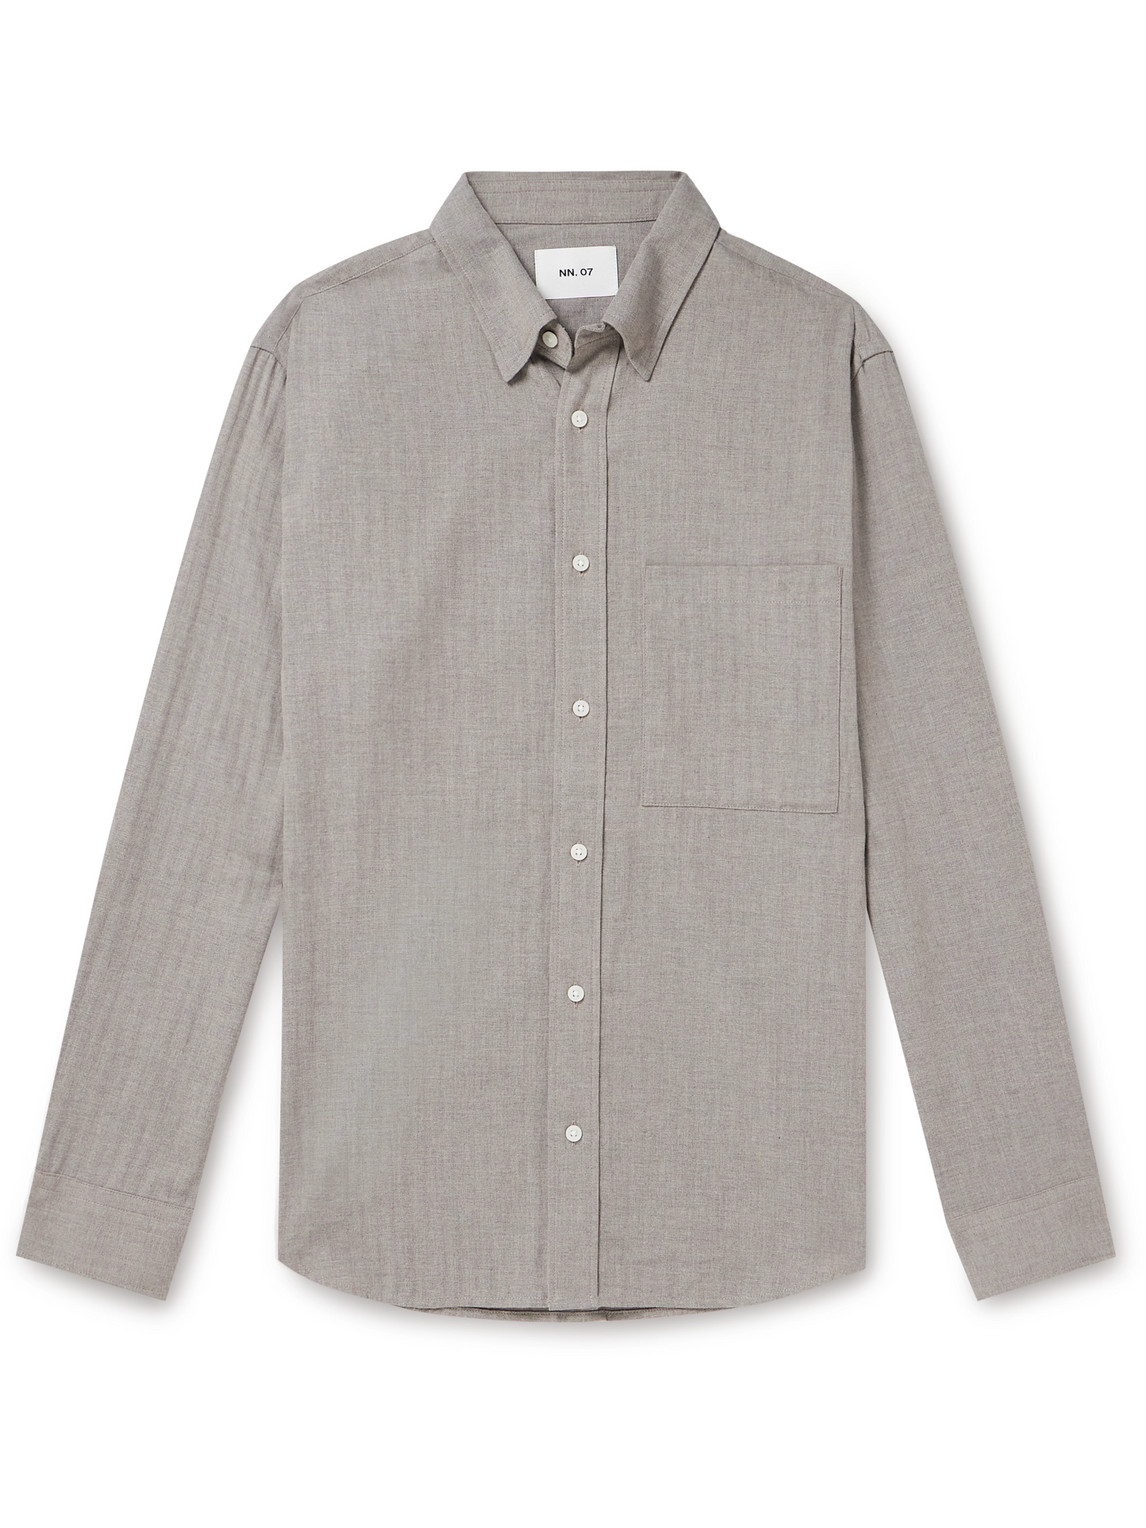 Nn07 Cohen 5726 Herringbone Cotton Shirt In Gray